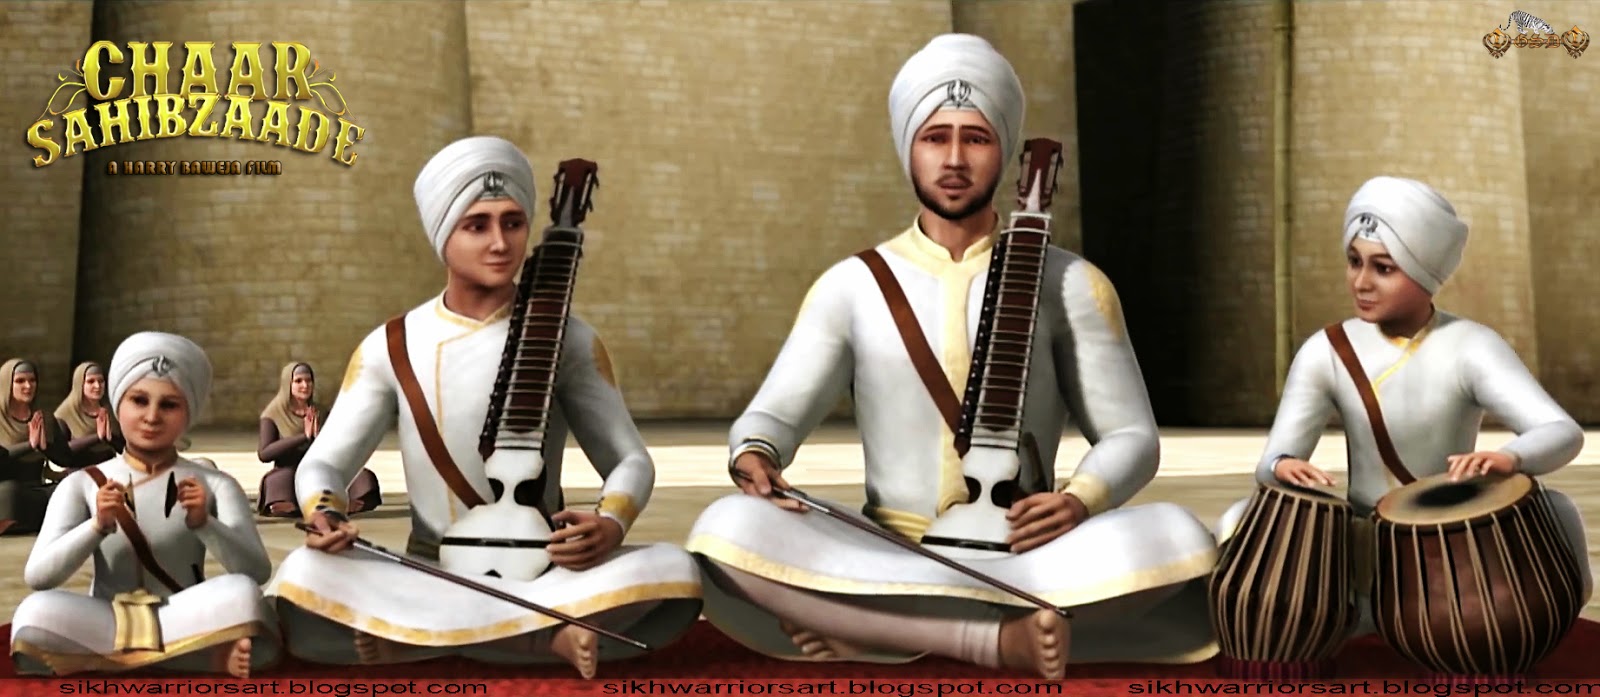 Sikh Warriors Chaar Sahibzaade 3D HD Movie Wallpapers